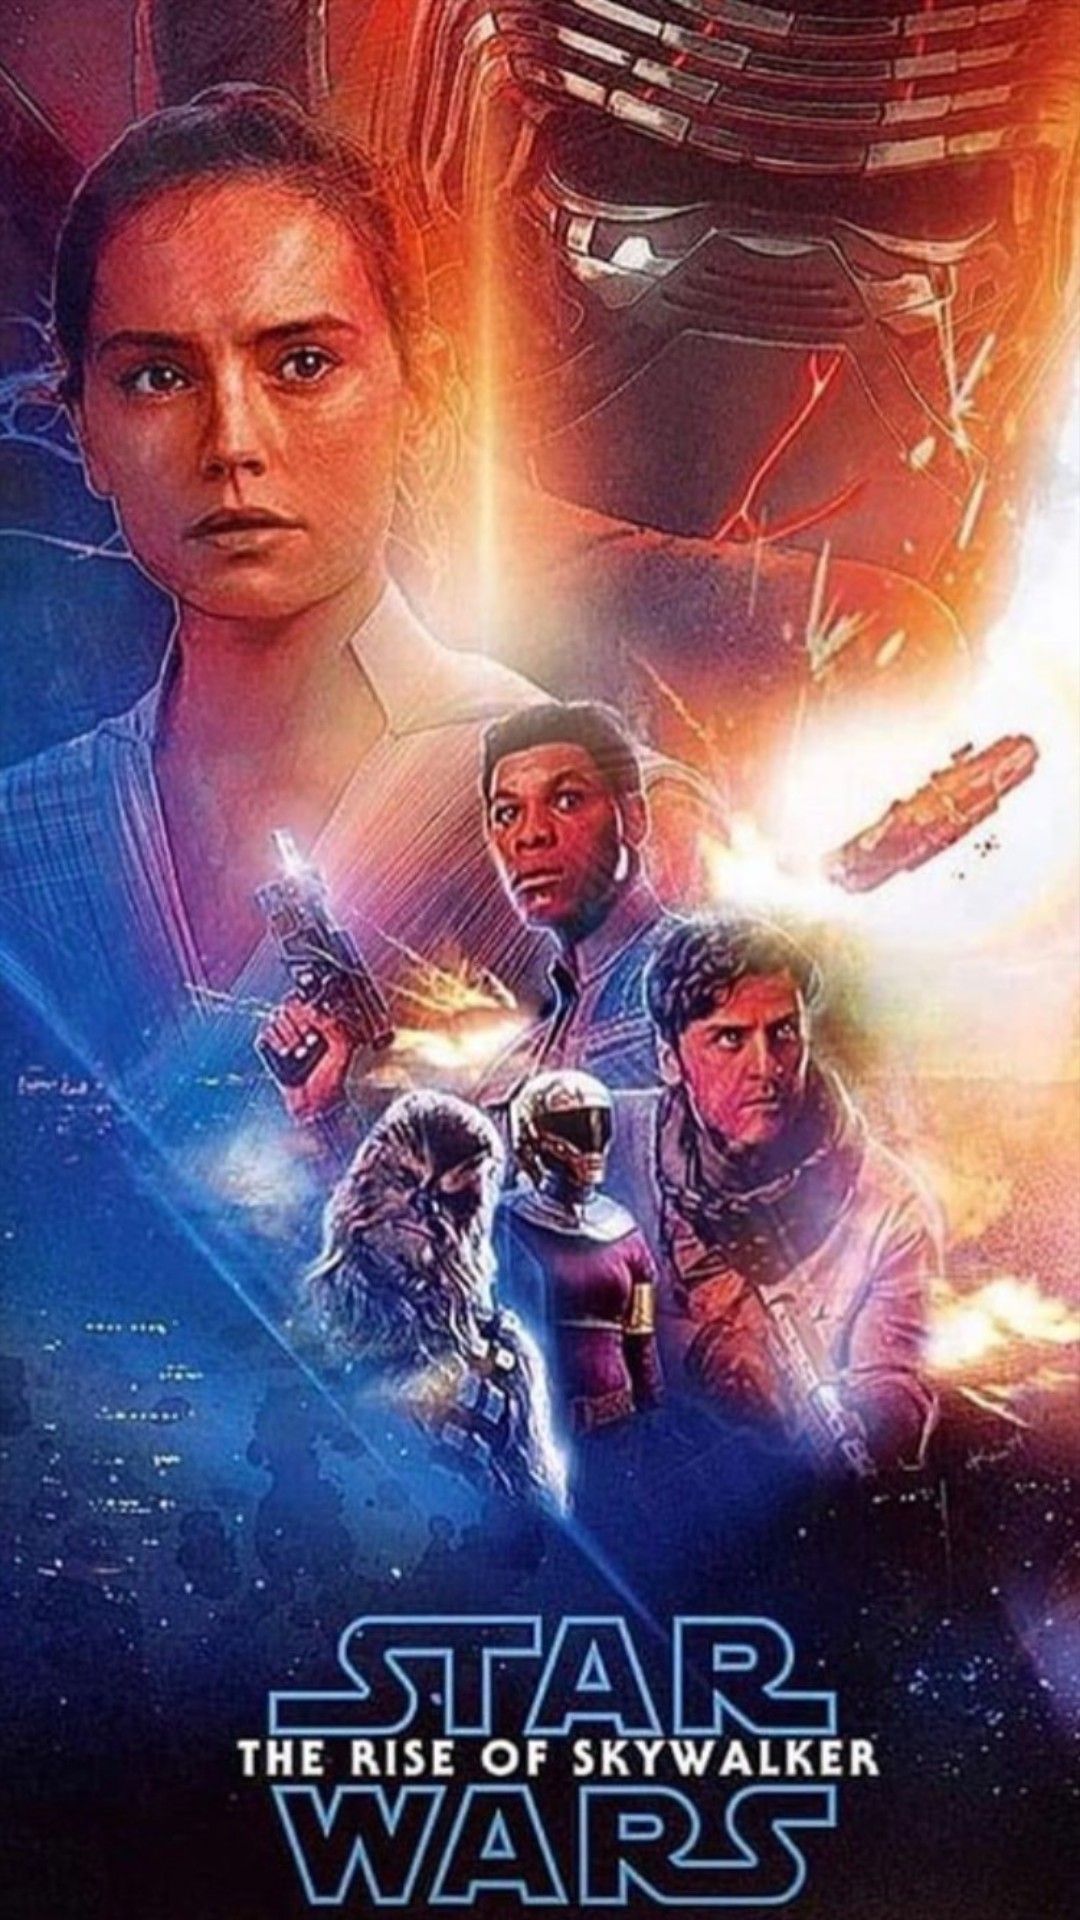 Star Wars TROS. Star wars sequel trilogy, Star wars movies posters, Star wars image